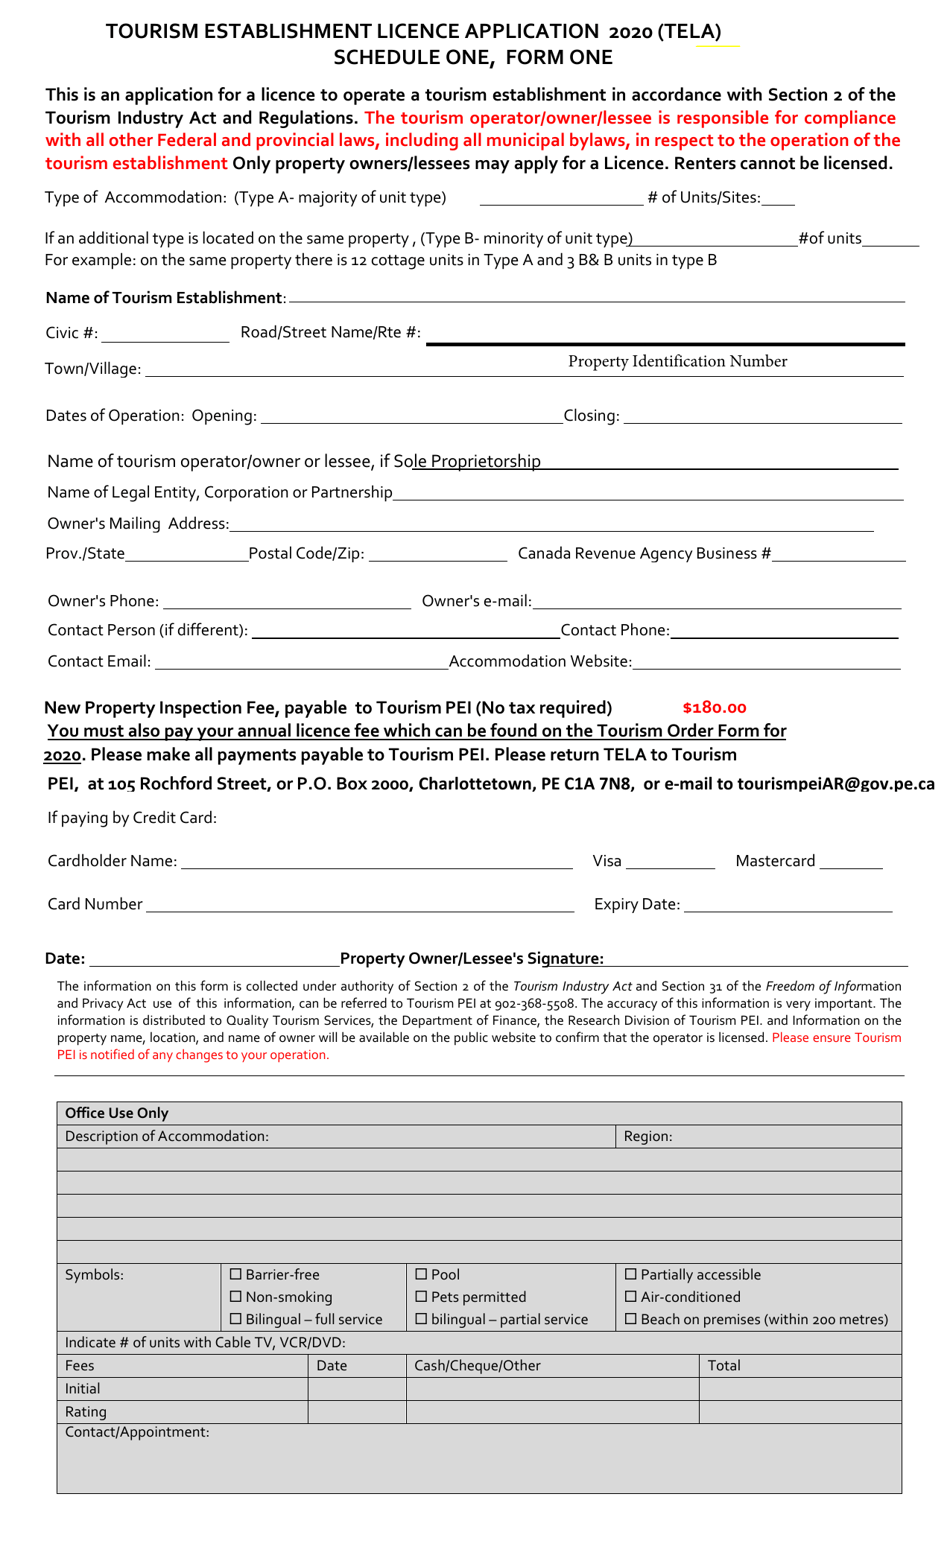 Form 1 Schedule 1 Tourism Establishment License Application (Tela) - Prince Edward Island, Canada, Page 1